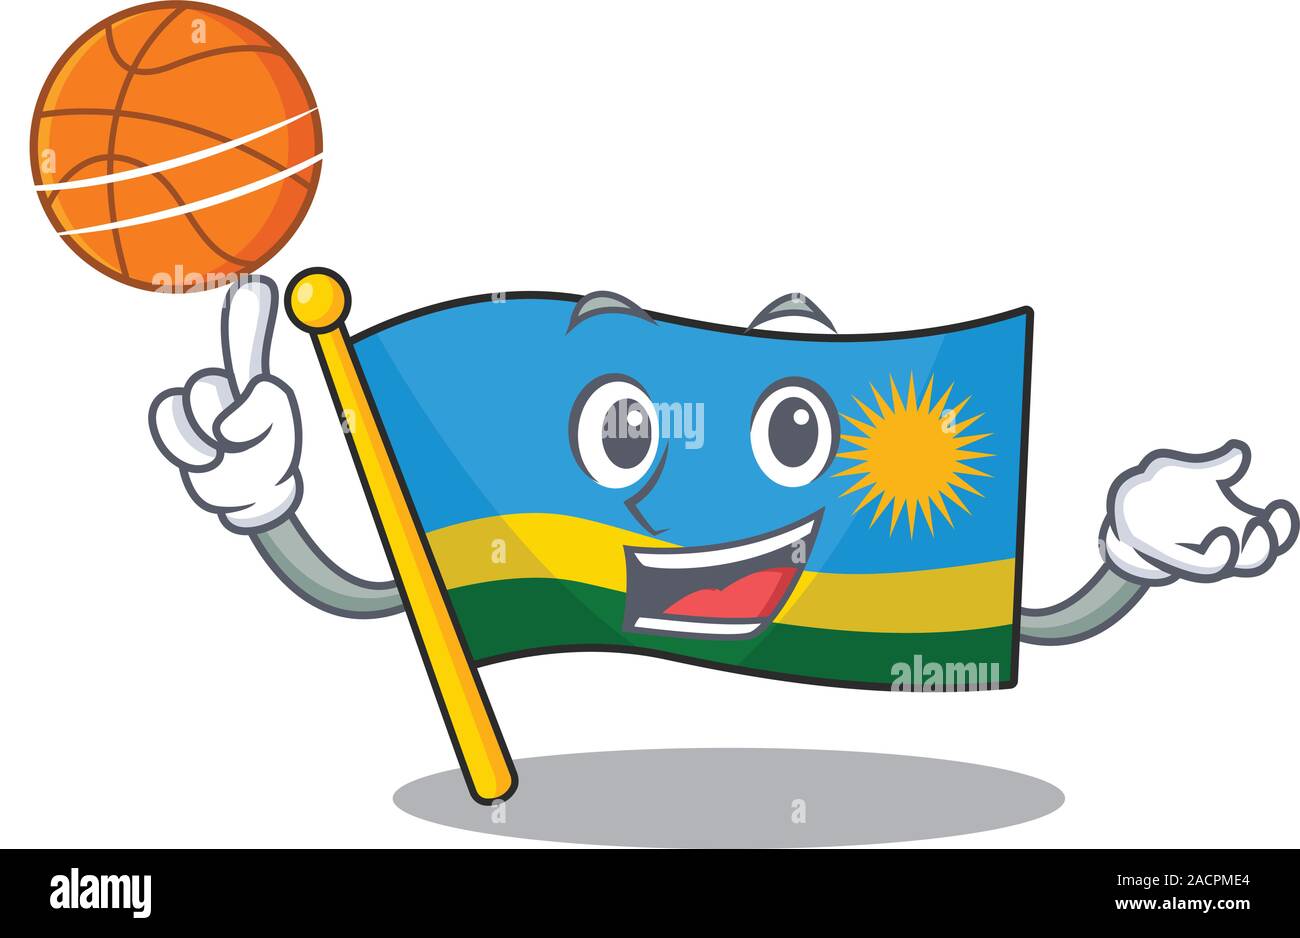 Mascot of flag rwanda cartoon character style with basketball Stock Vector